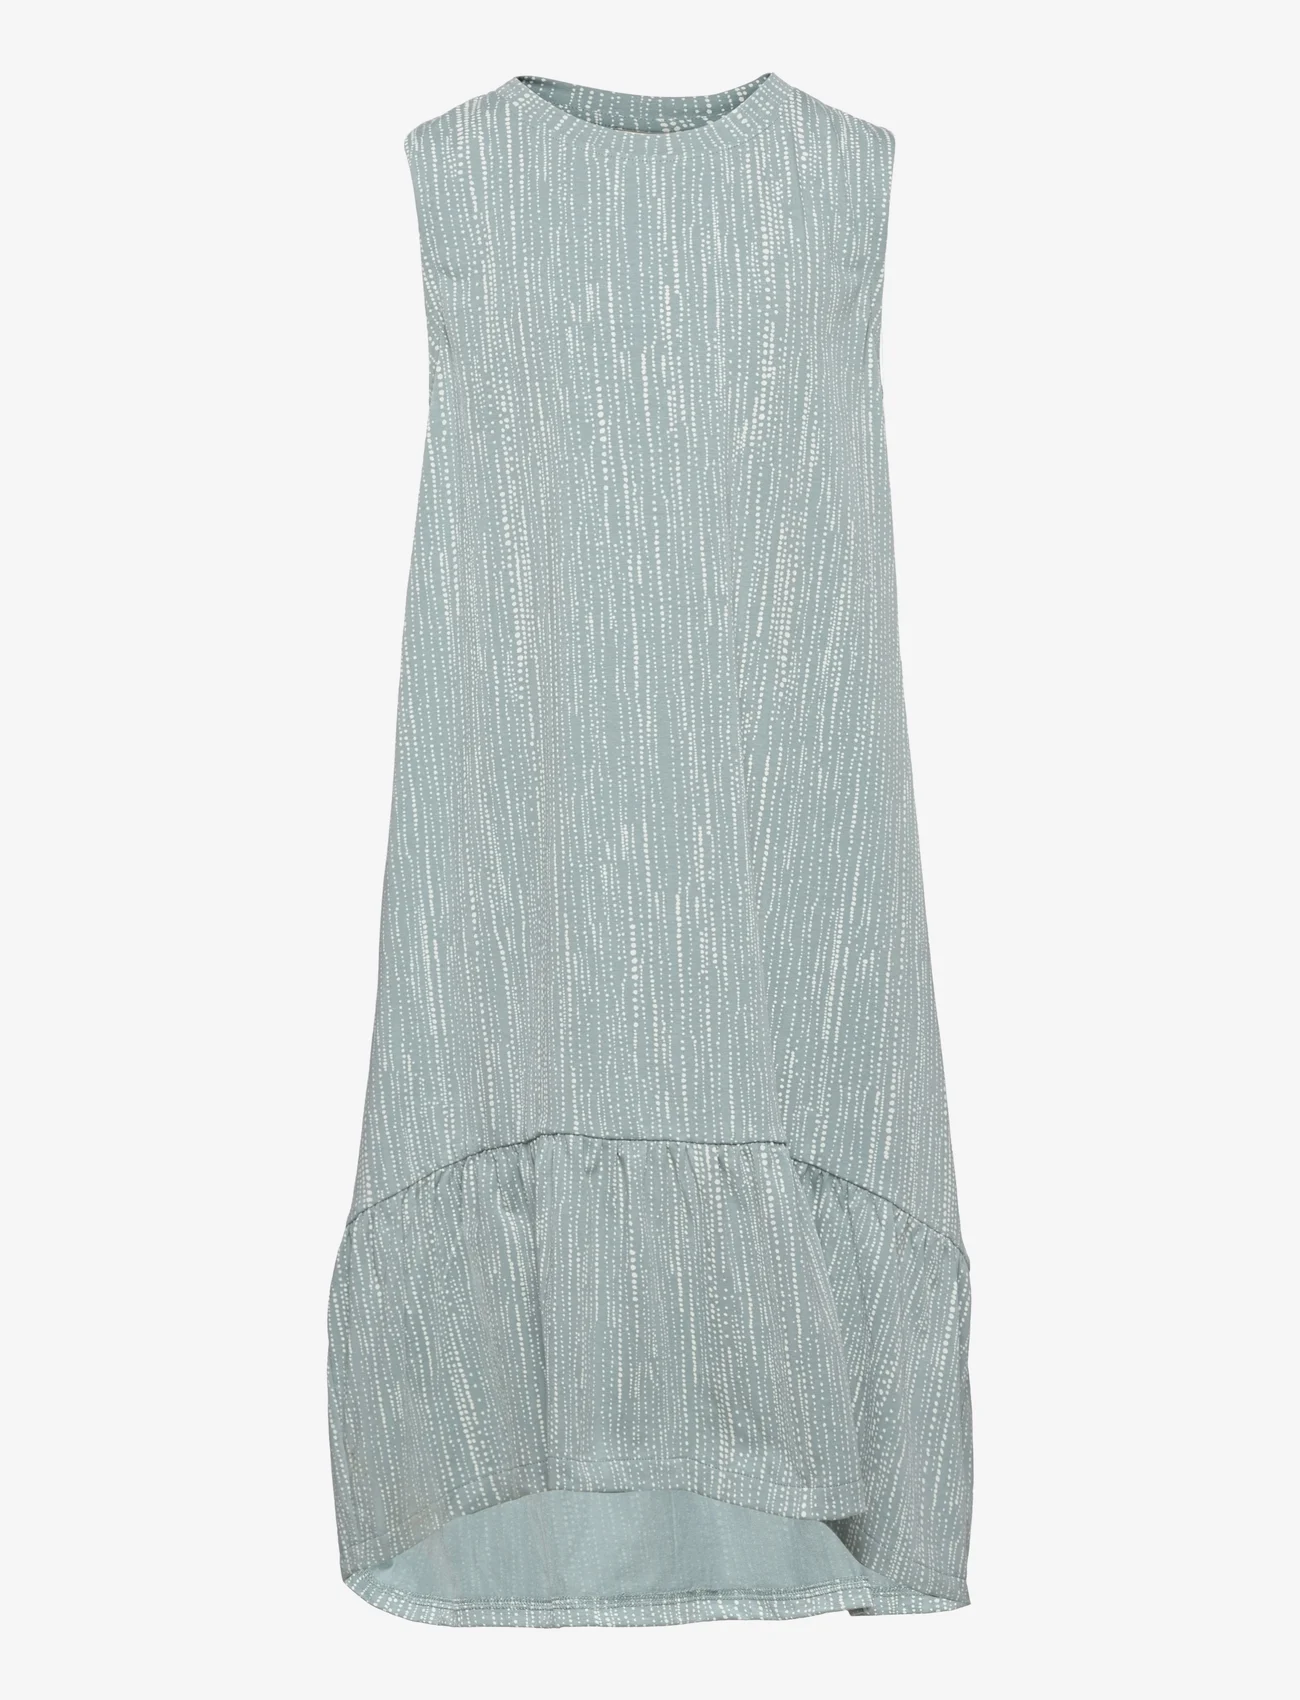 Soft Gallery - SGJenella Milkysea sl dress - vakarinės suknelės - silver blue - 0